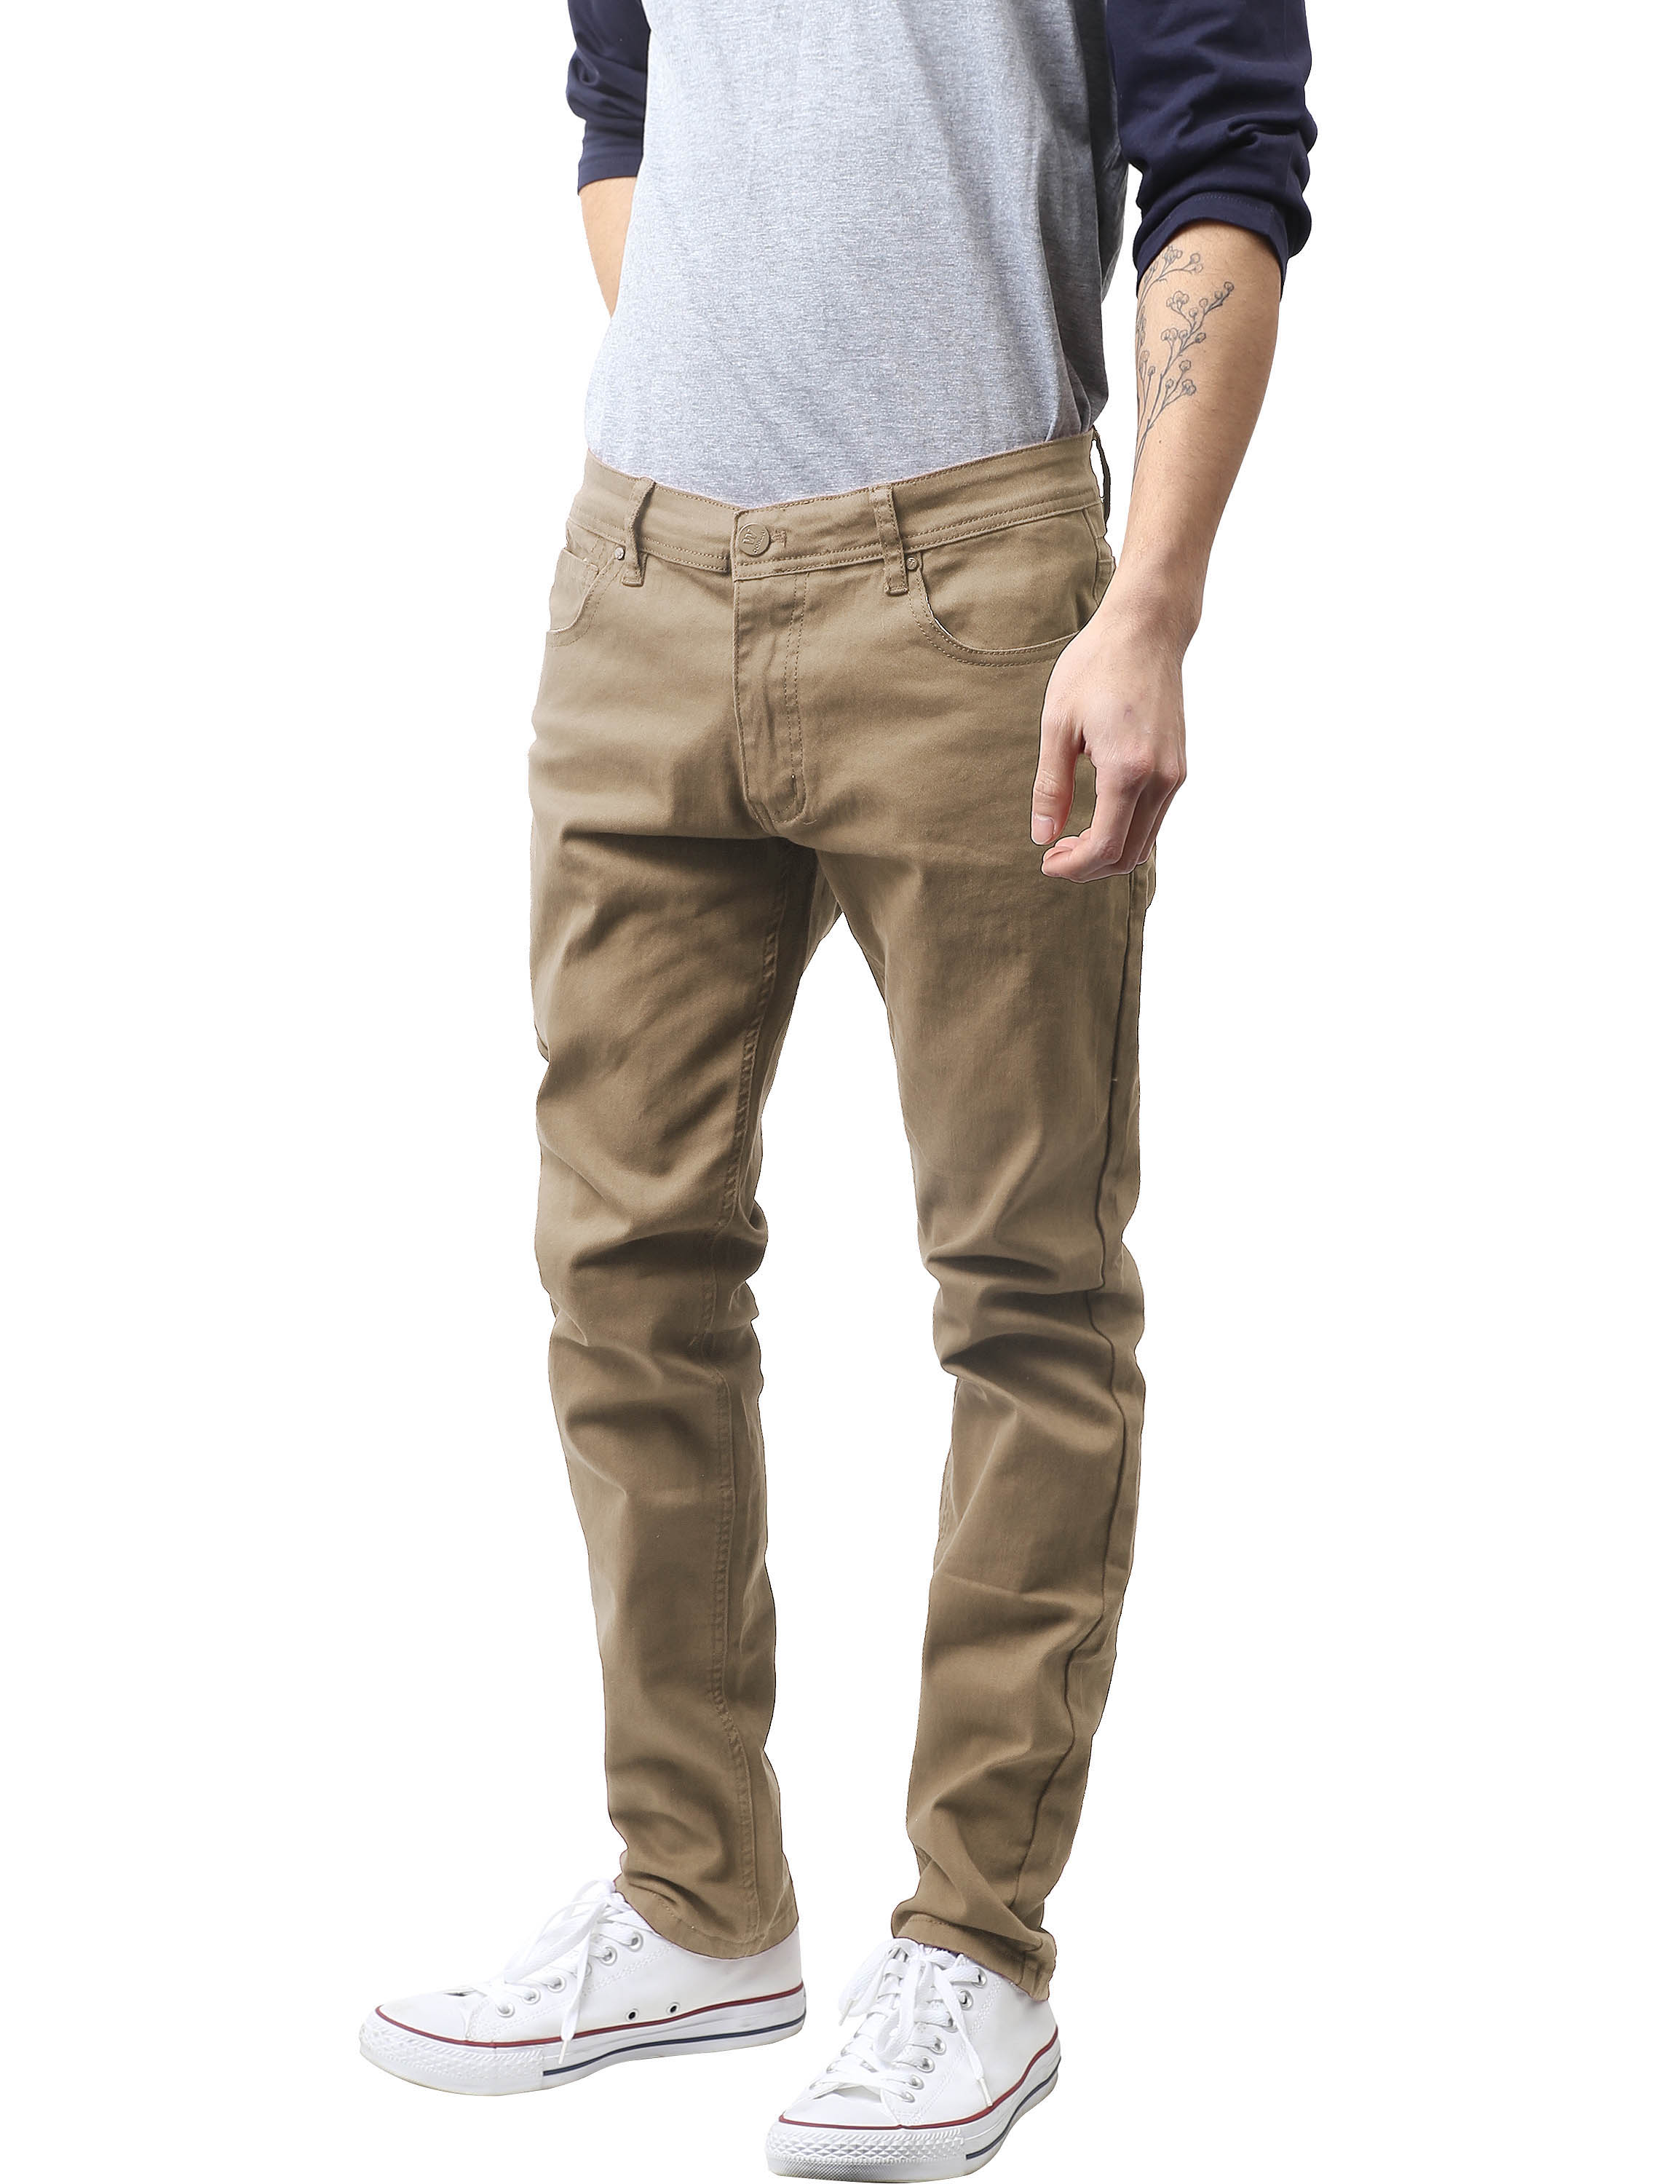 Ma Croix Mens Skinny Jeans Stretch Skinny Fit Slim Denim Pants - image 1 of 6